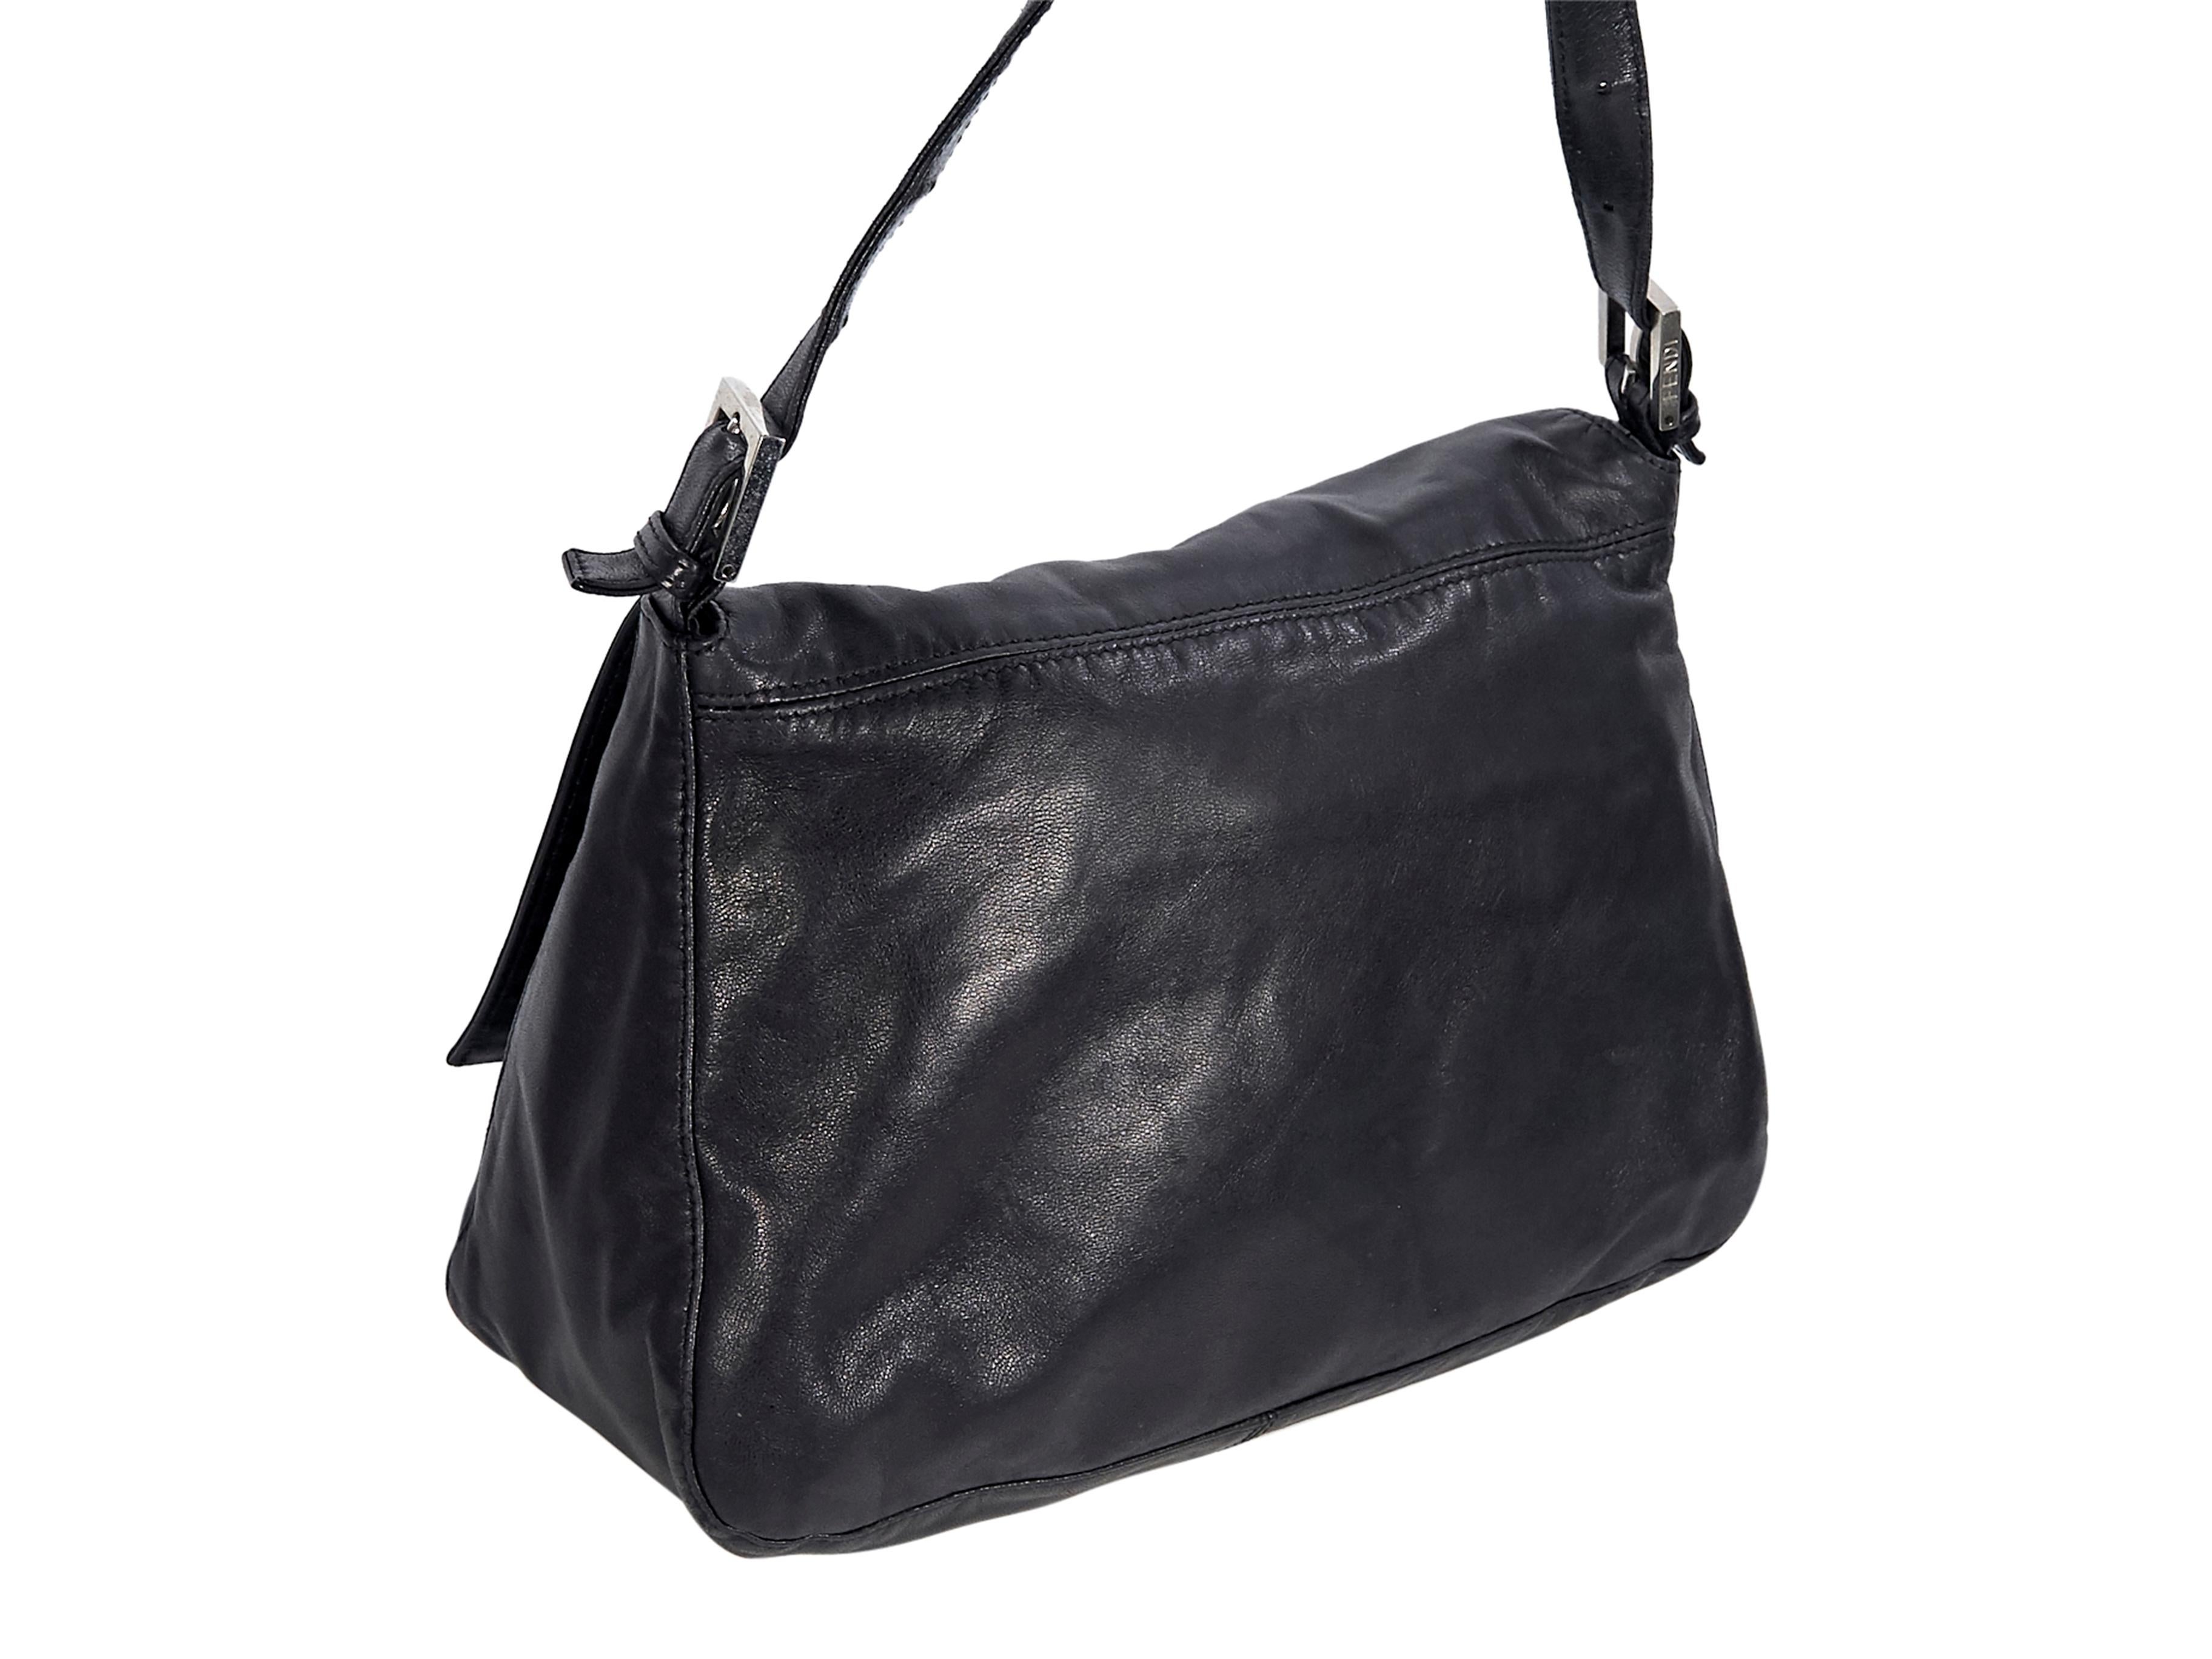 Product details:  Vintage black leather Mama Forever shoulder bag by Fendi.  Adjustable shoulder strap.  Front flap with magnetic snap closure.  Lined interior with inner zip pocket.  11